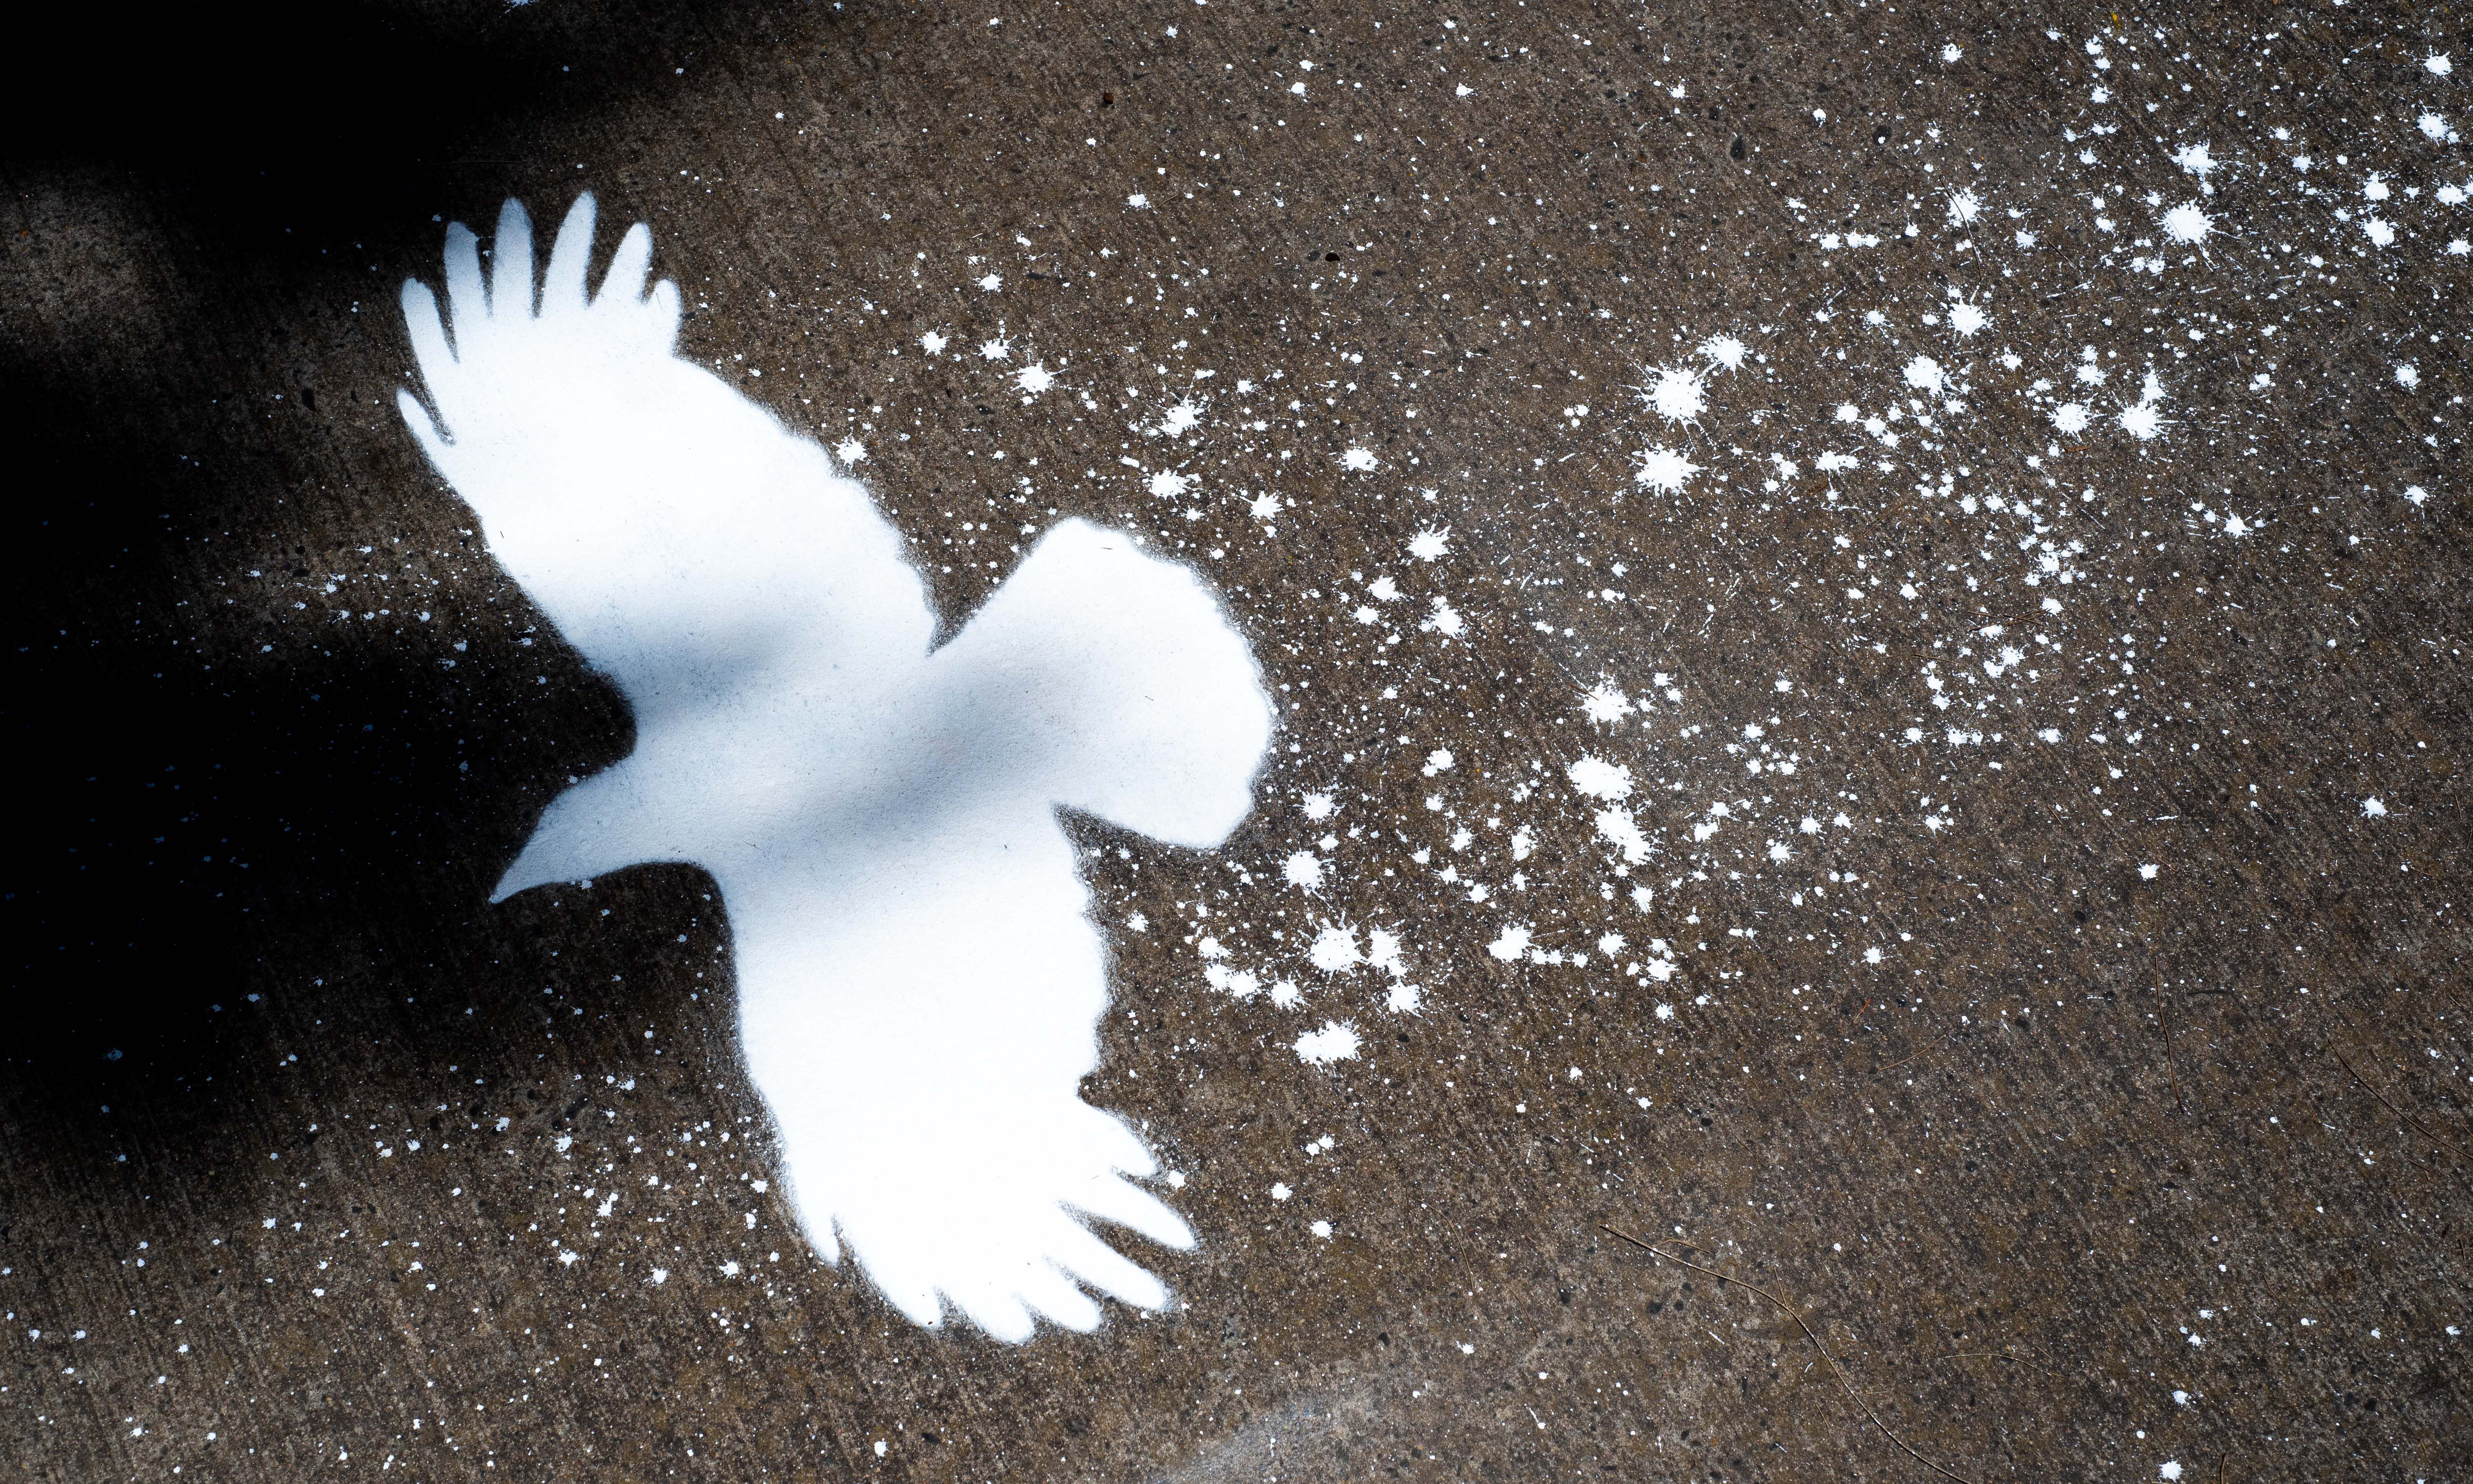 A stencil of a white bird on a concrete surface